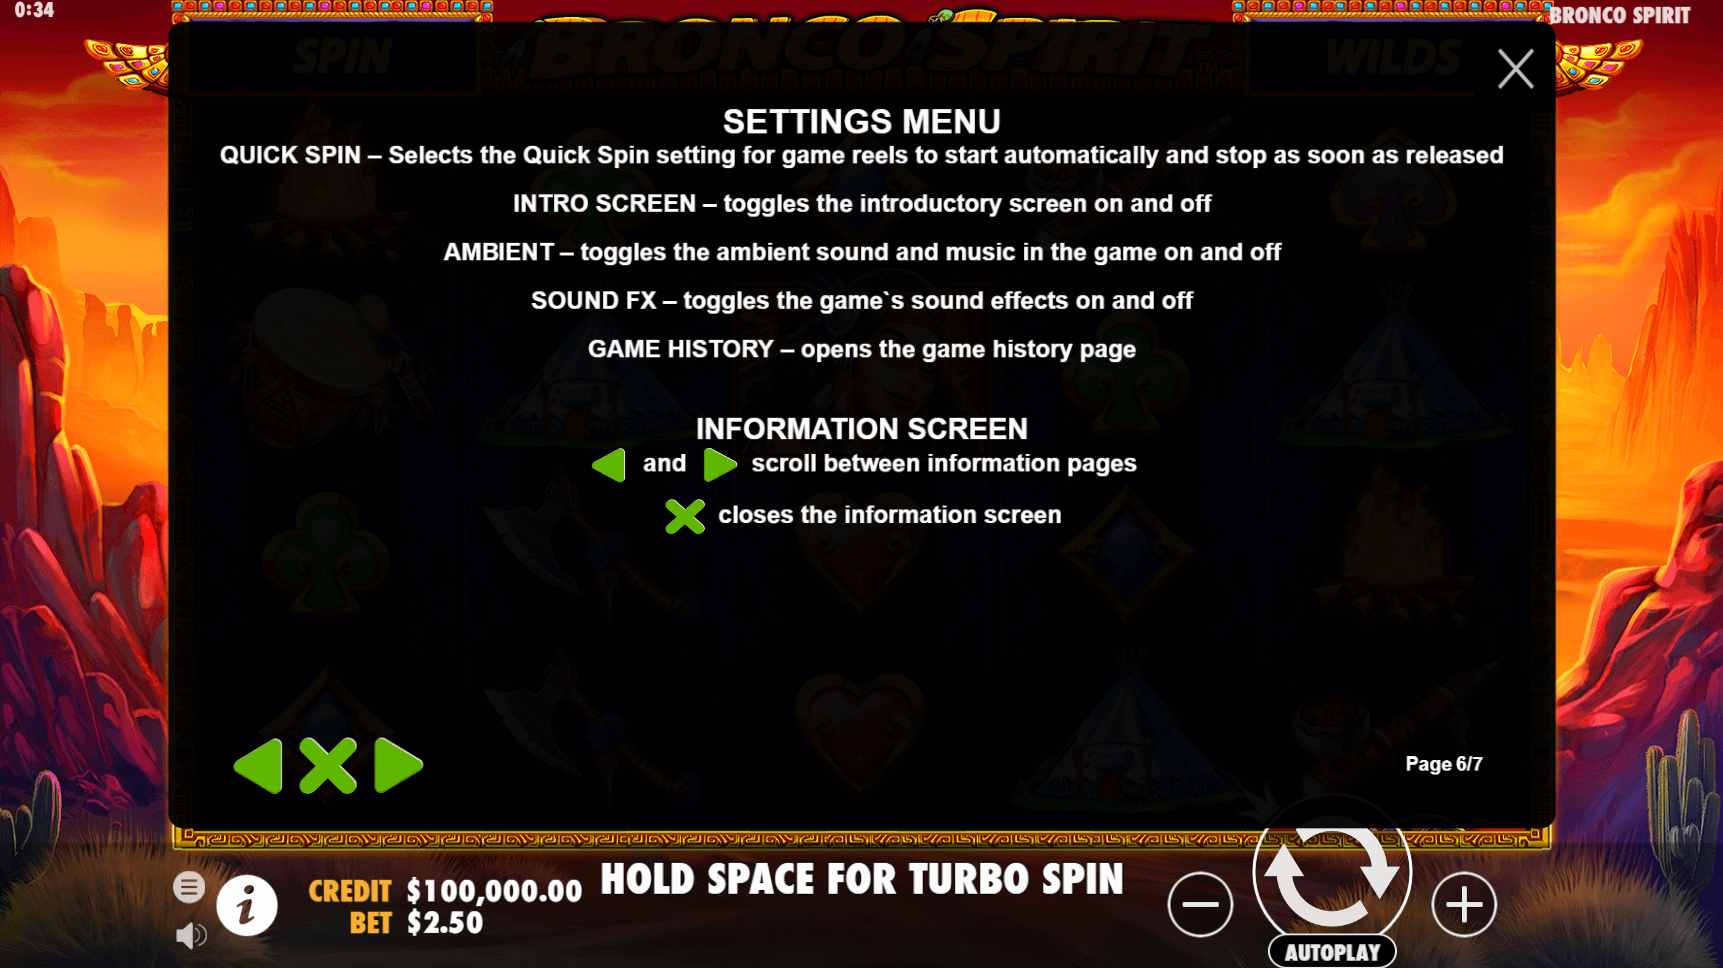 bronco spirit slot machine detail image 5